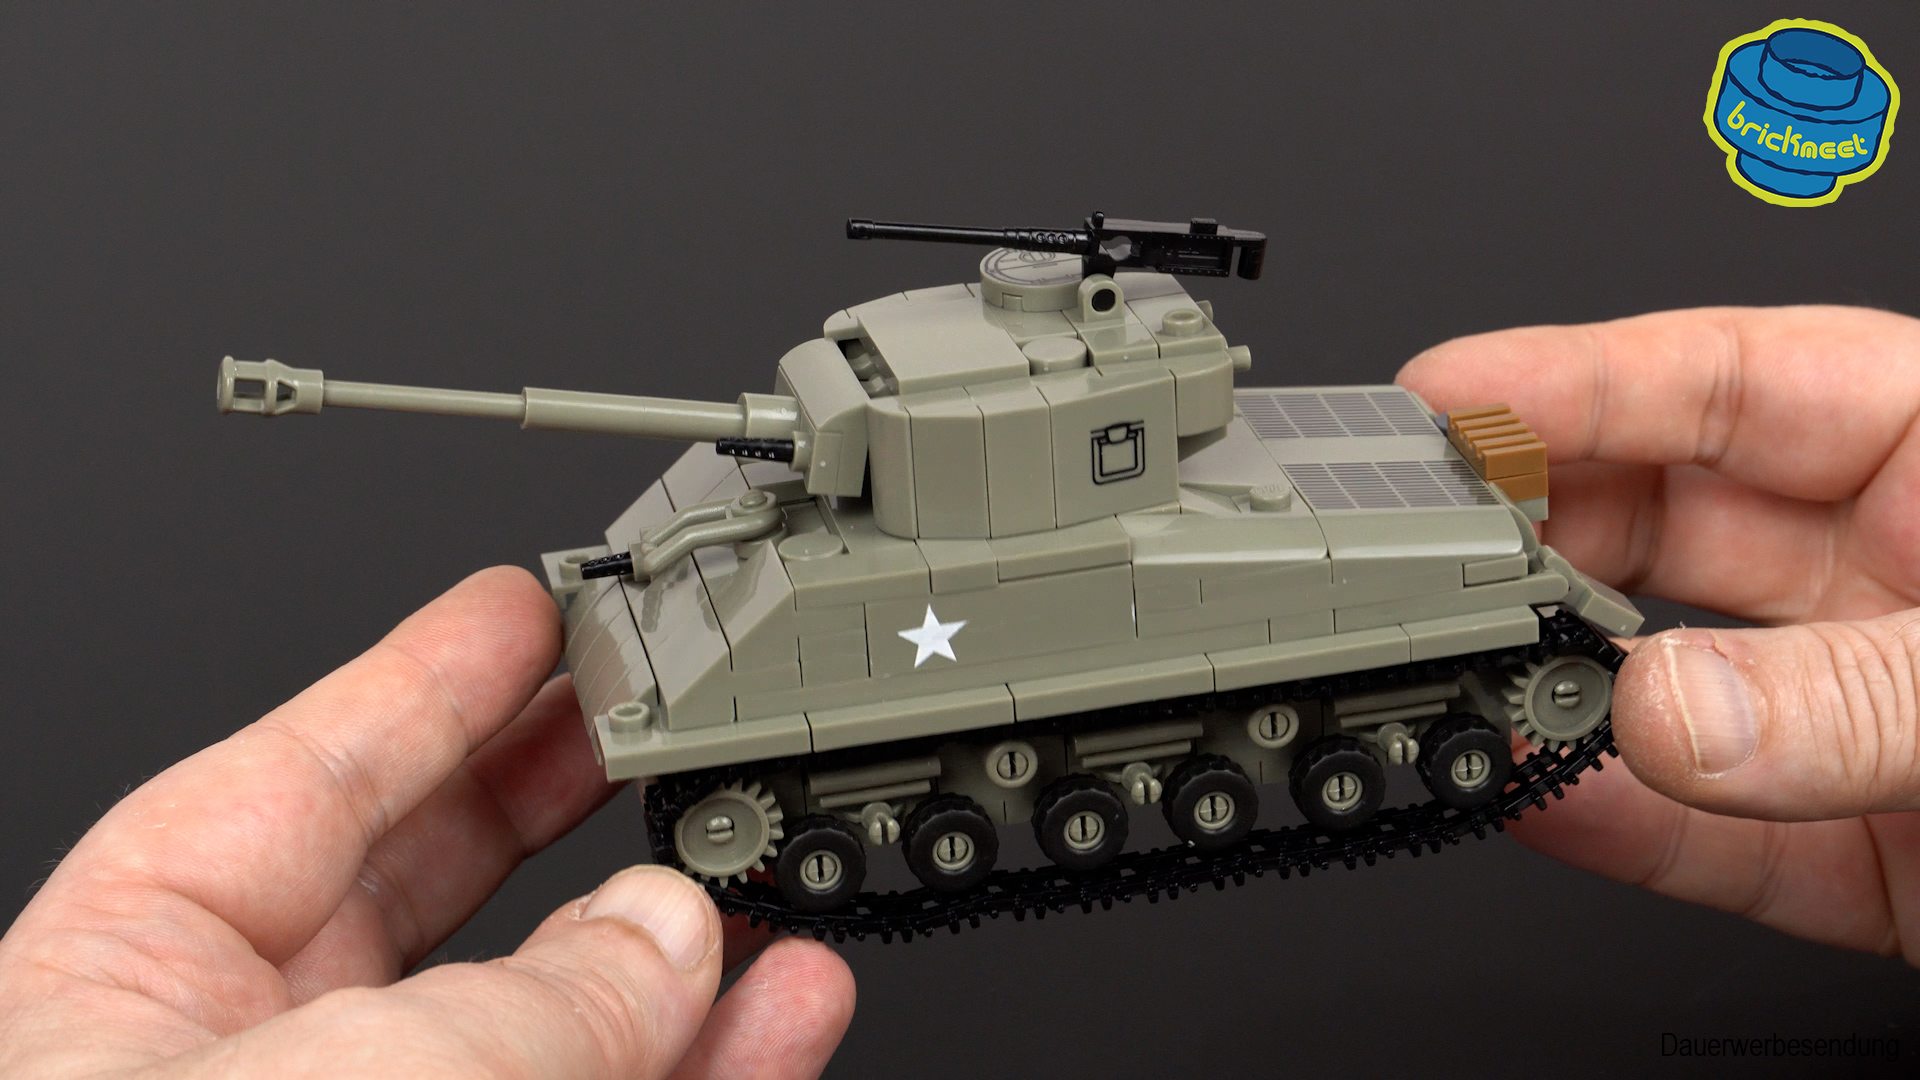 Cobi® char américain Sherman M4A3E8 - 2711